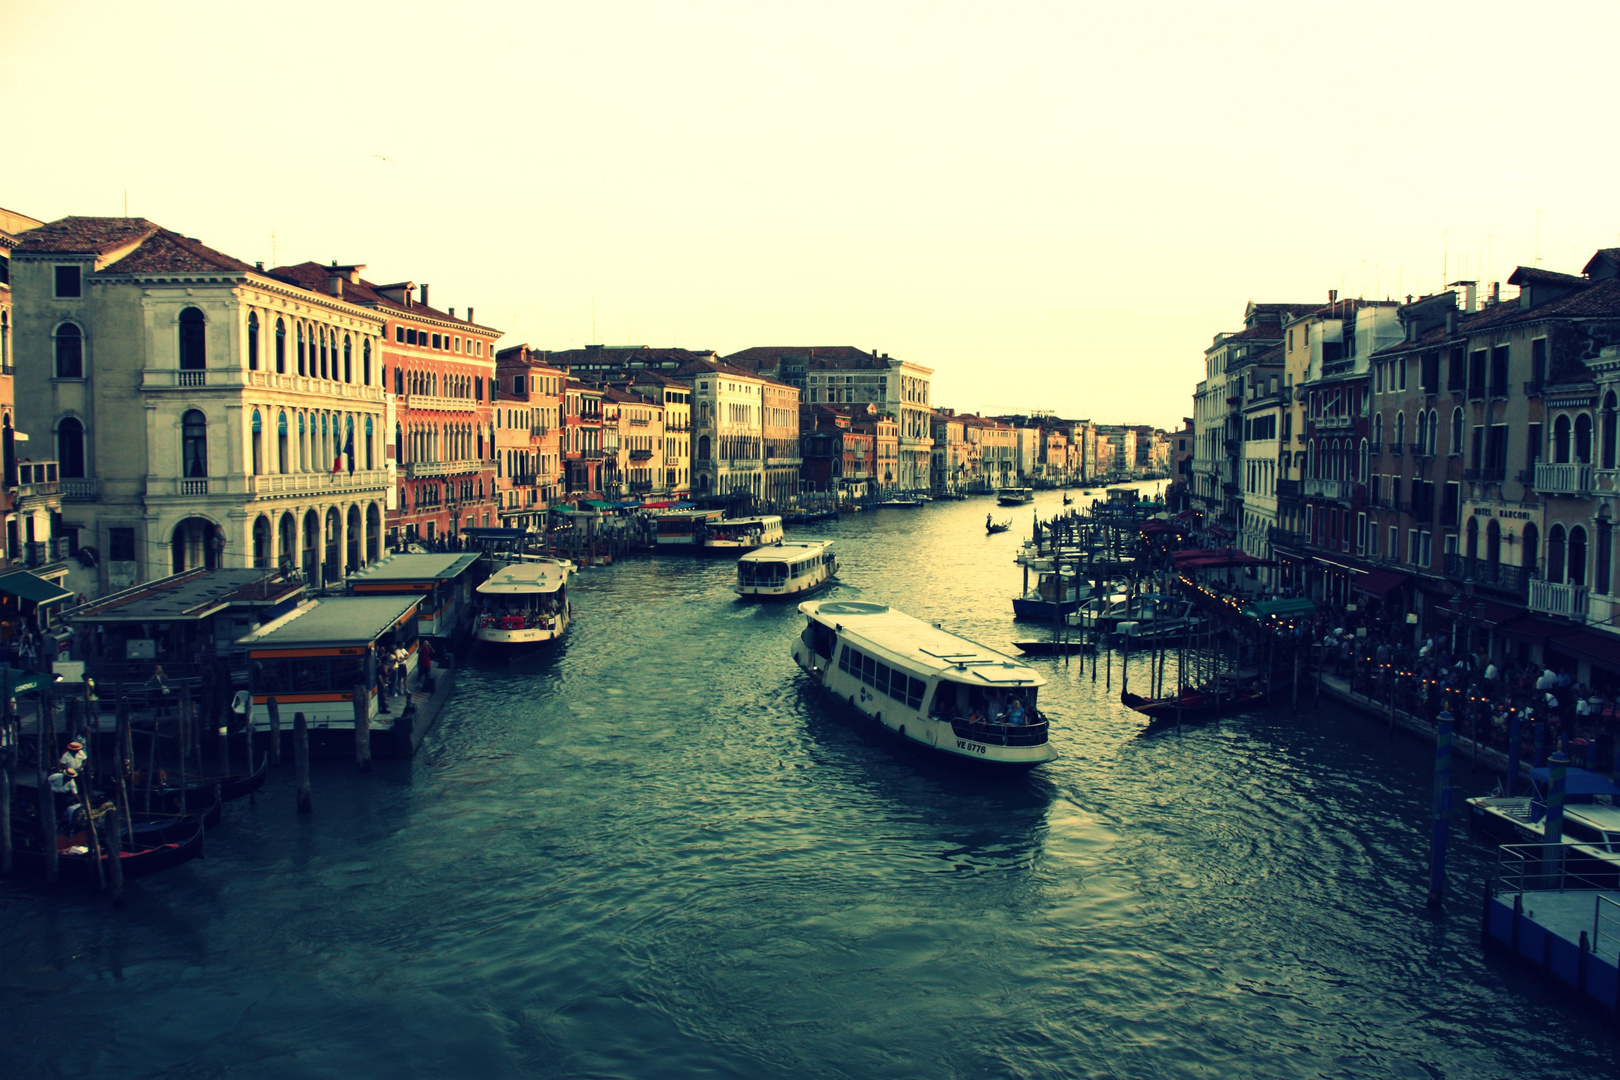 The City of Love - Venice